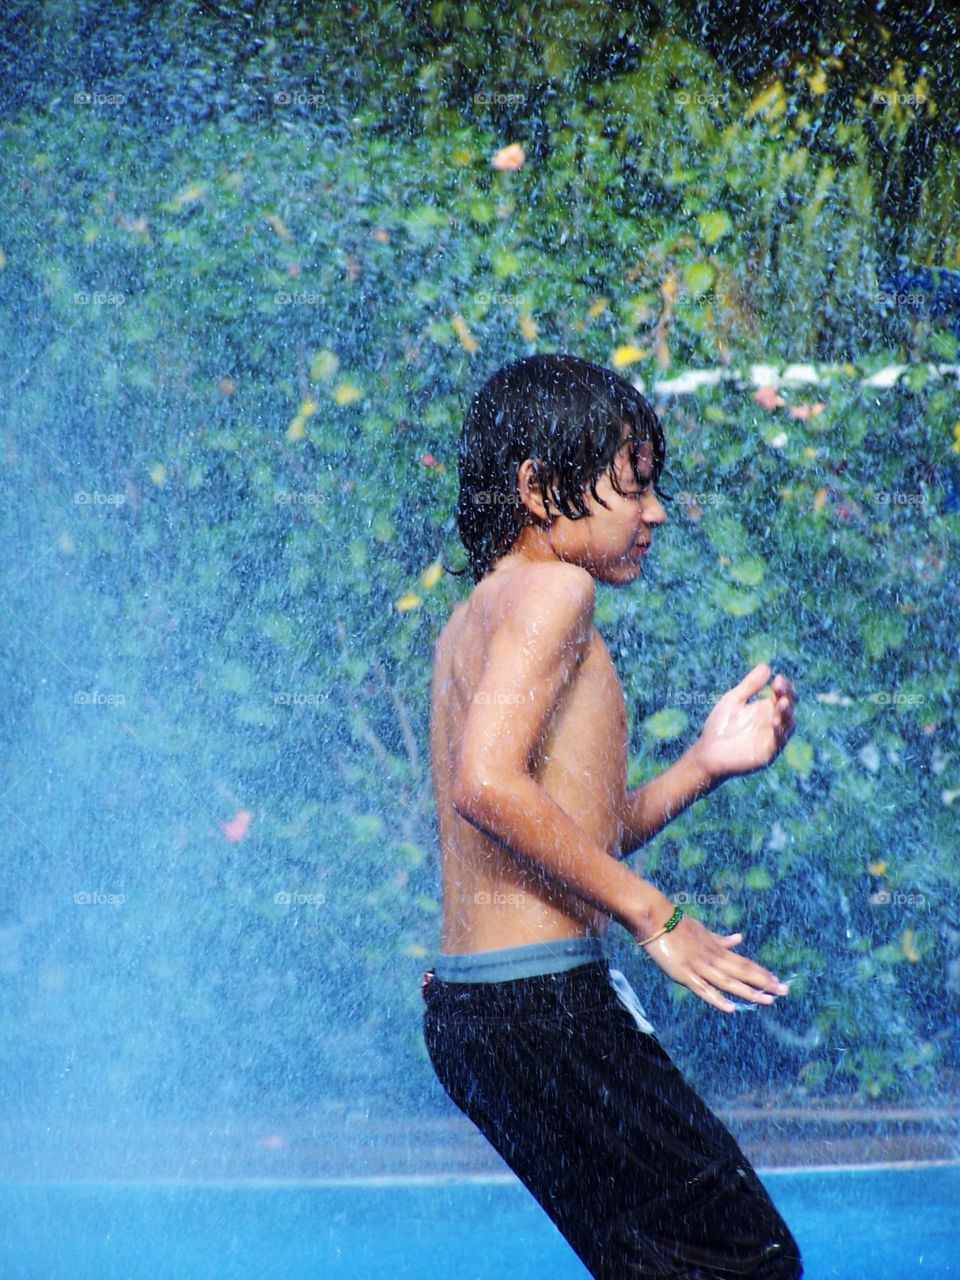 summer water playing boy by vladimiryleon